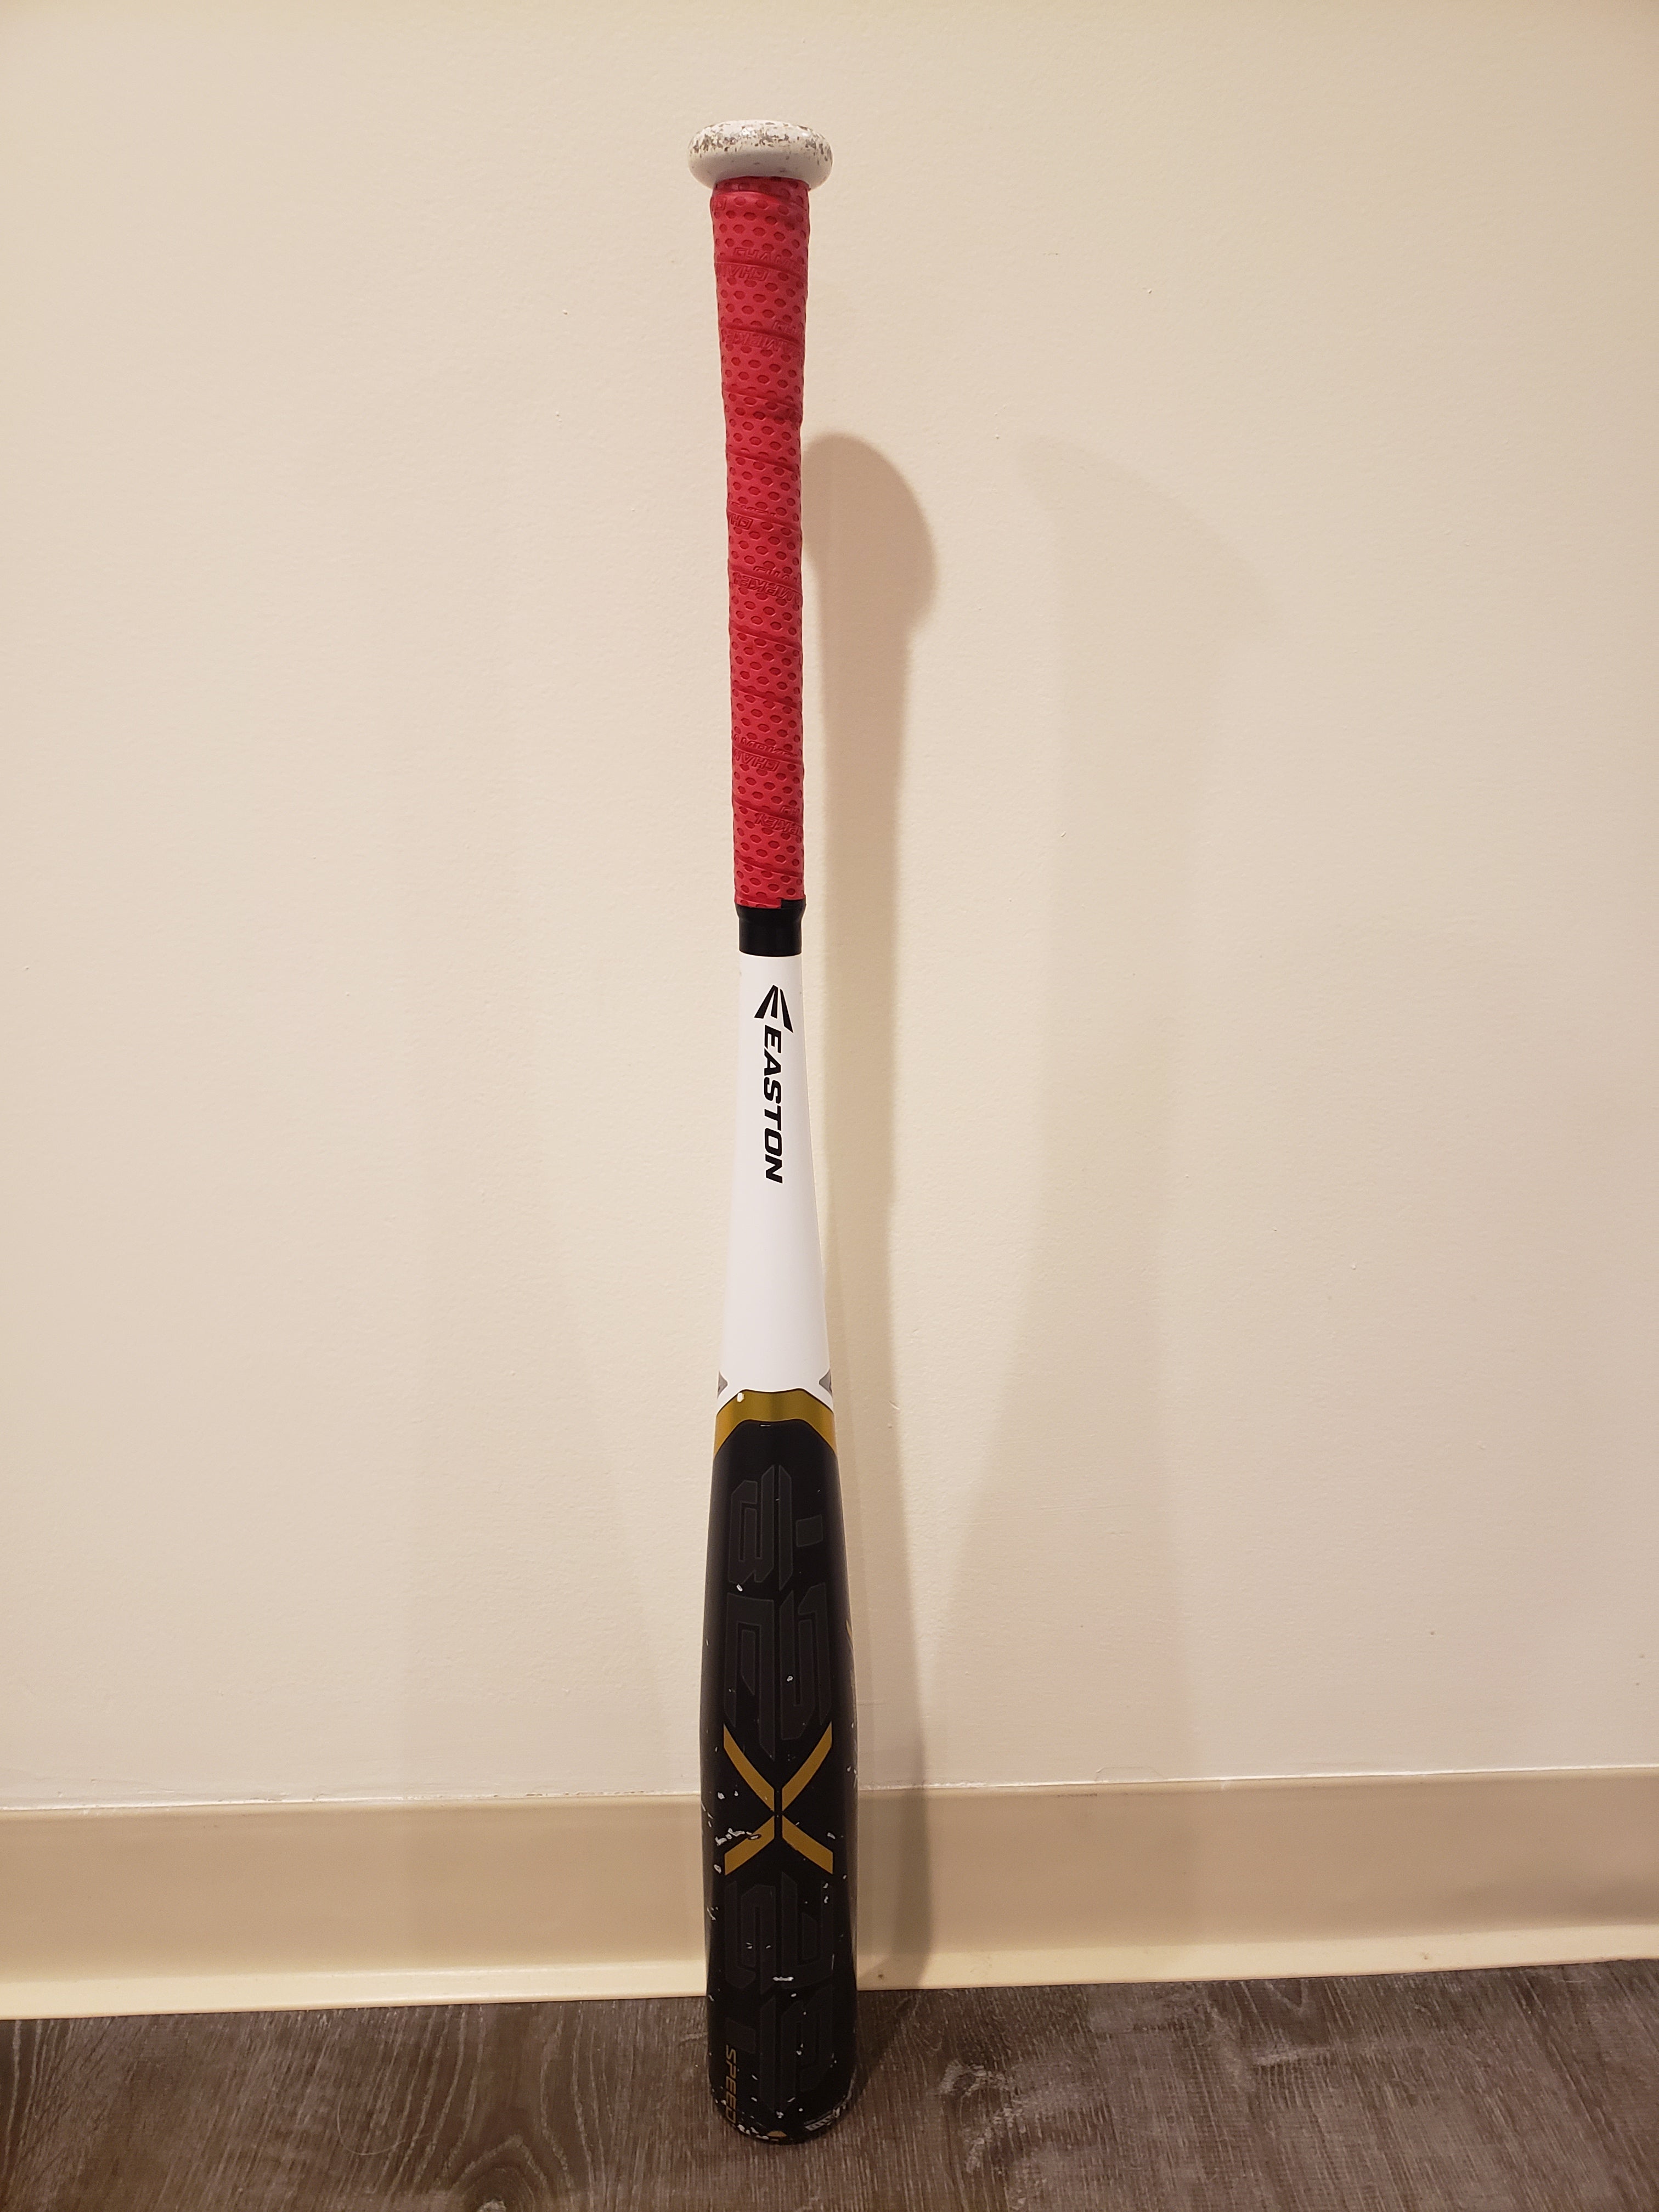 Easton S250 31in/28oz BBCOR Baseball Bat 